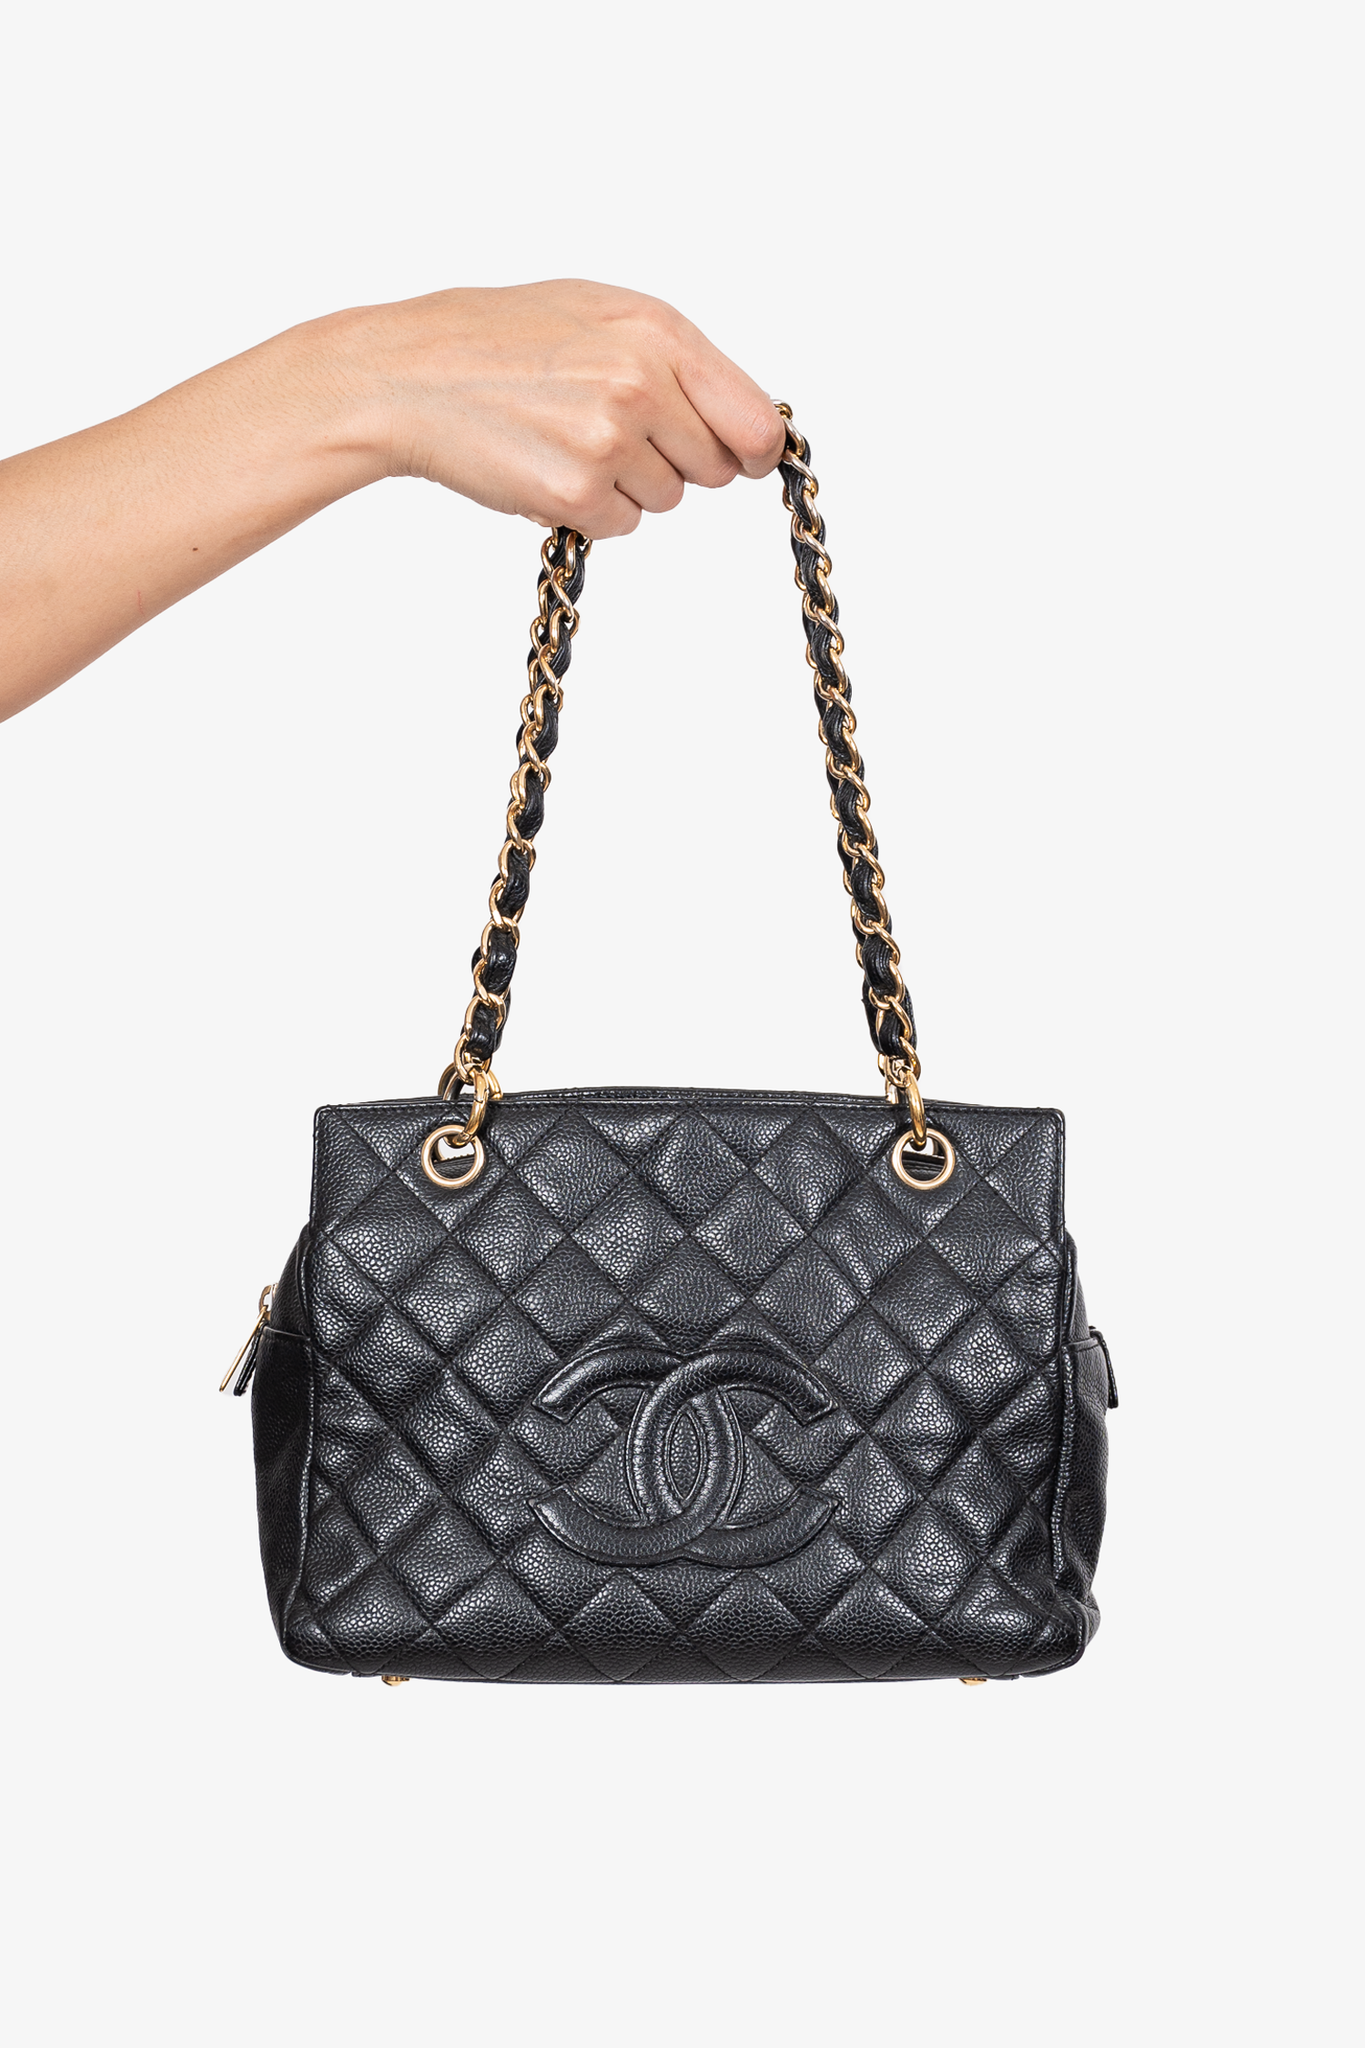 Chanel Timeless Black Caviar Leather CC Boston Duffle Bag with Strap 6cc62